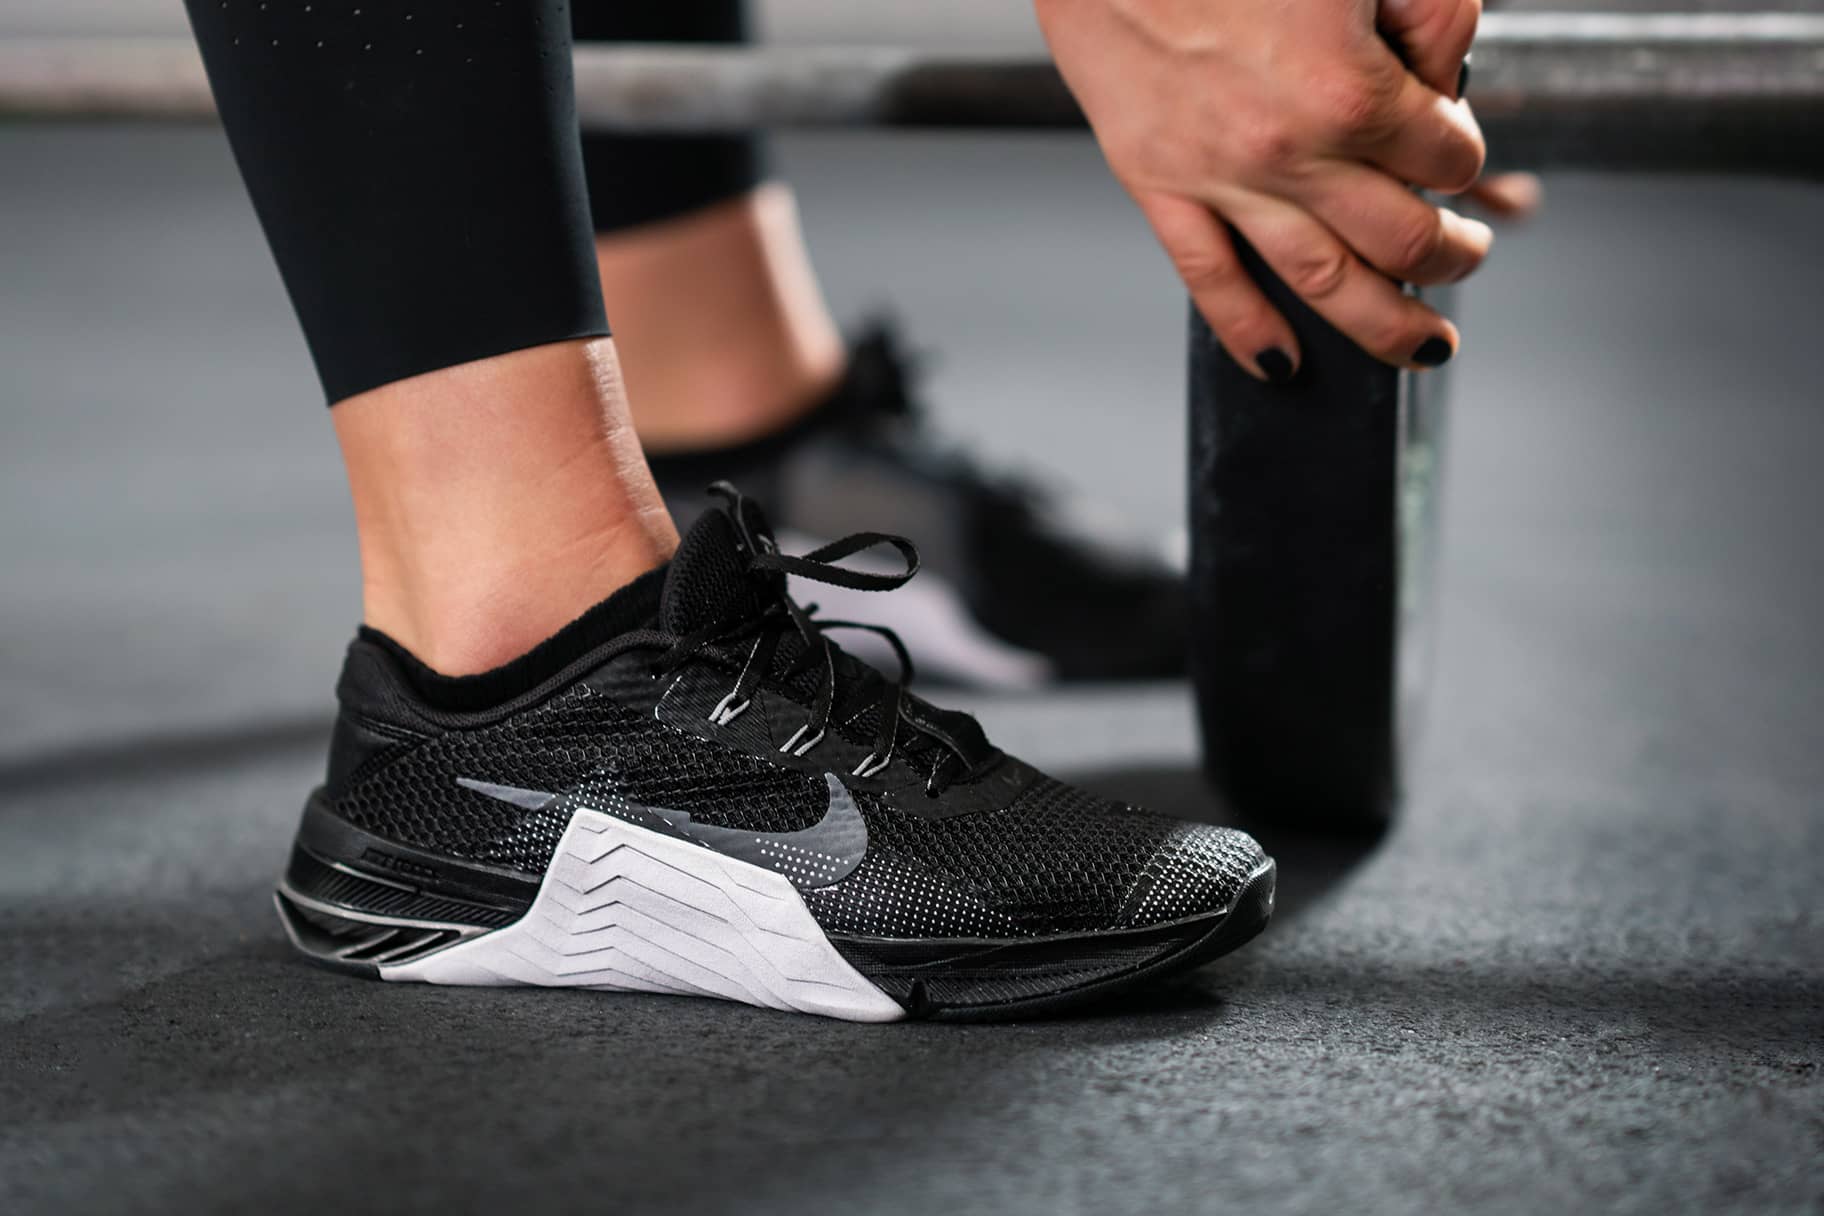 Retouch Zeal revenge Women's Gym & Training Shoes. Nike.com